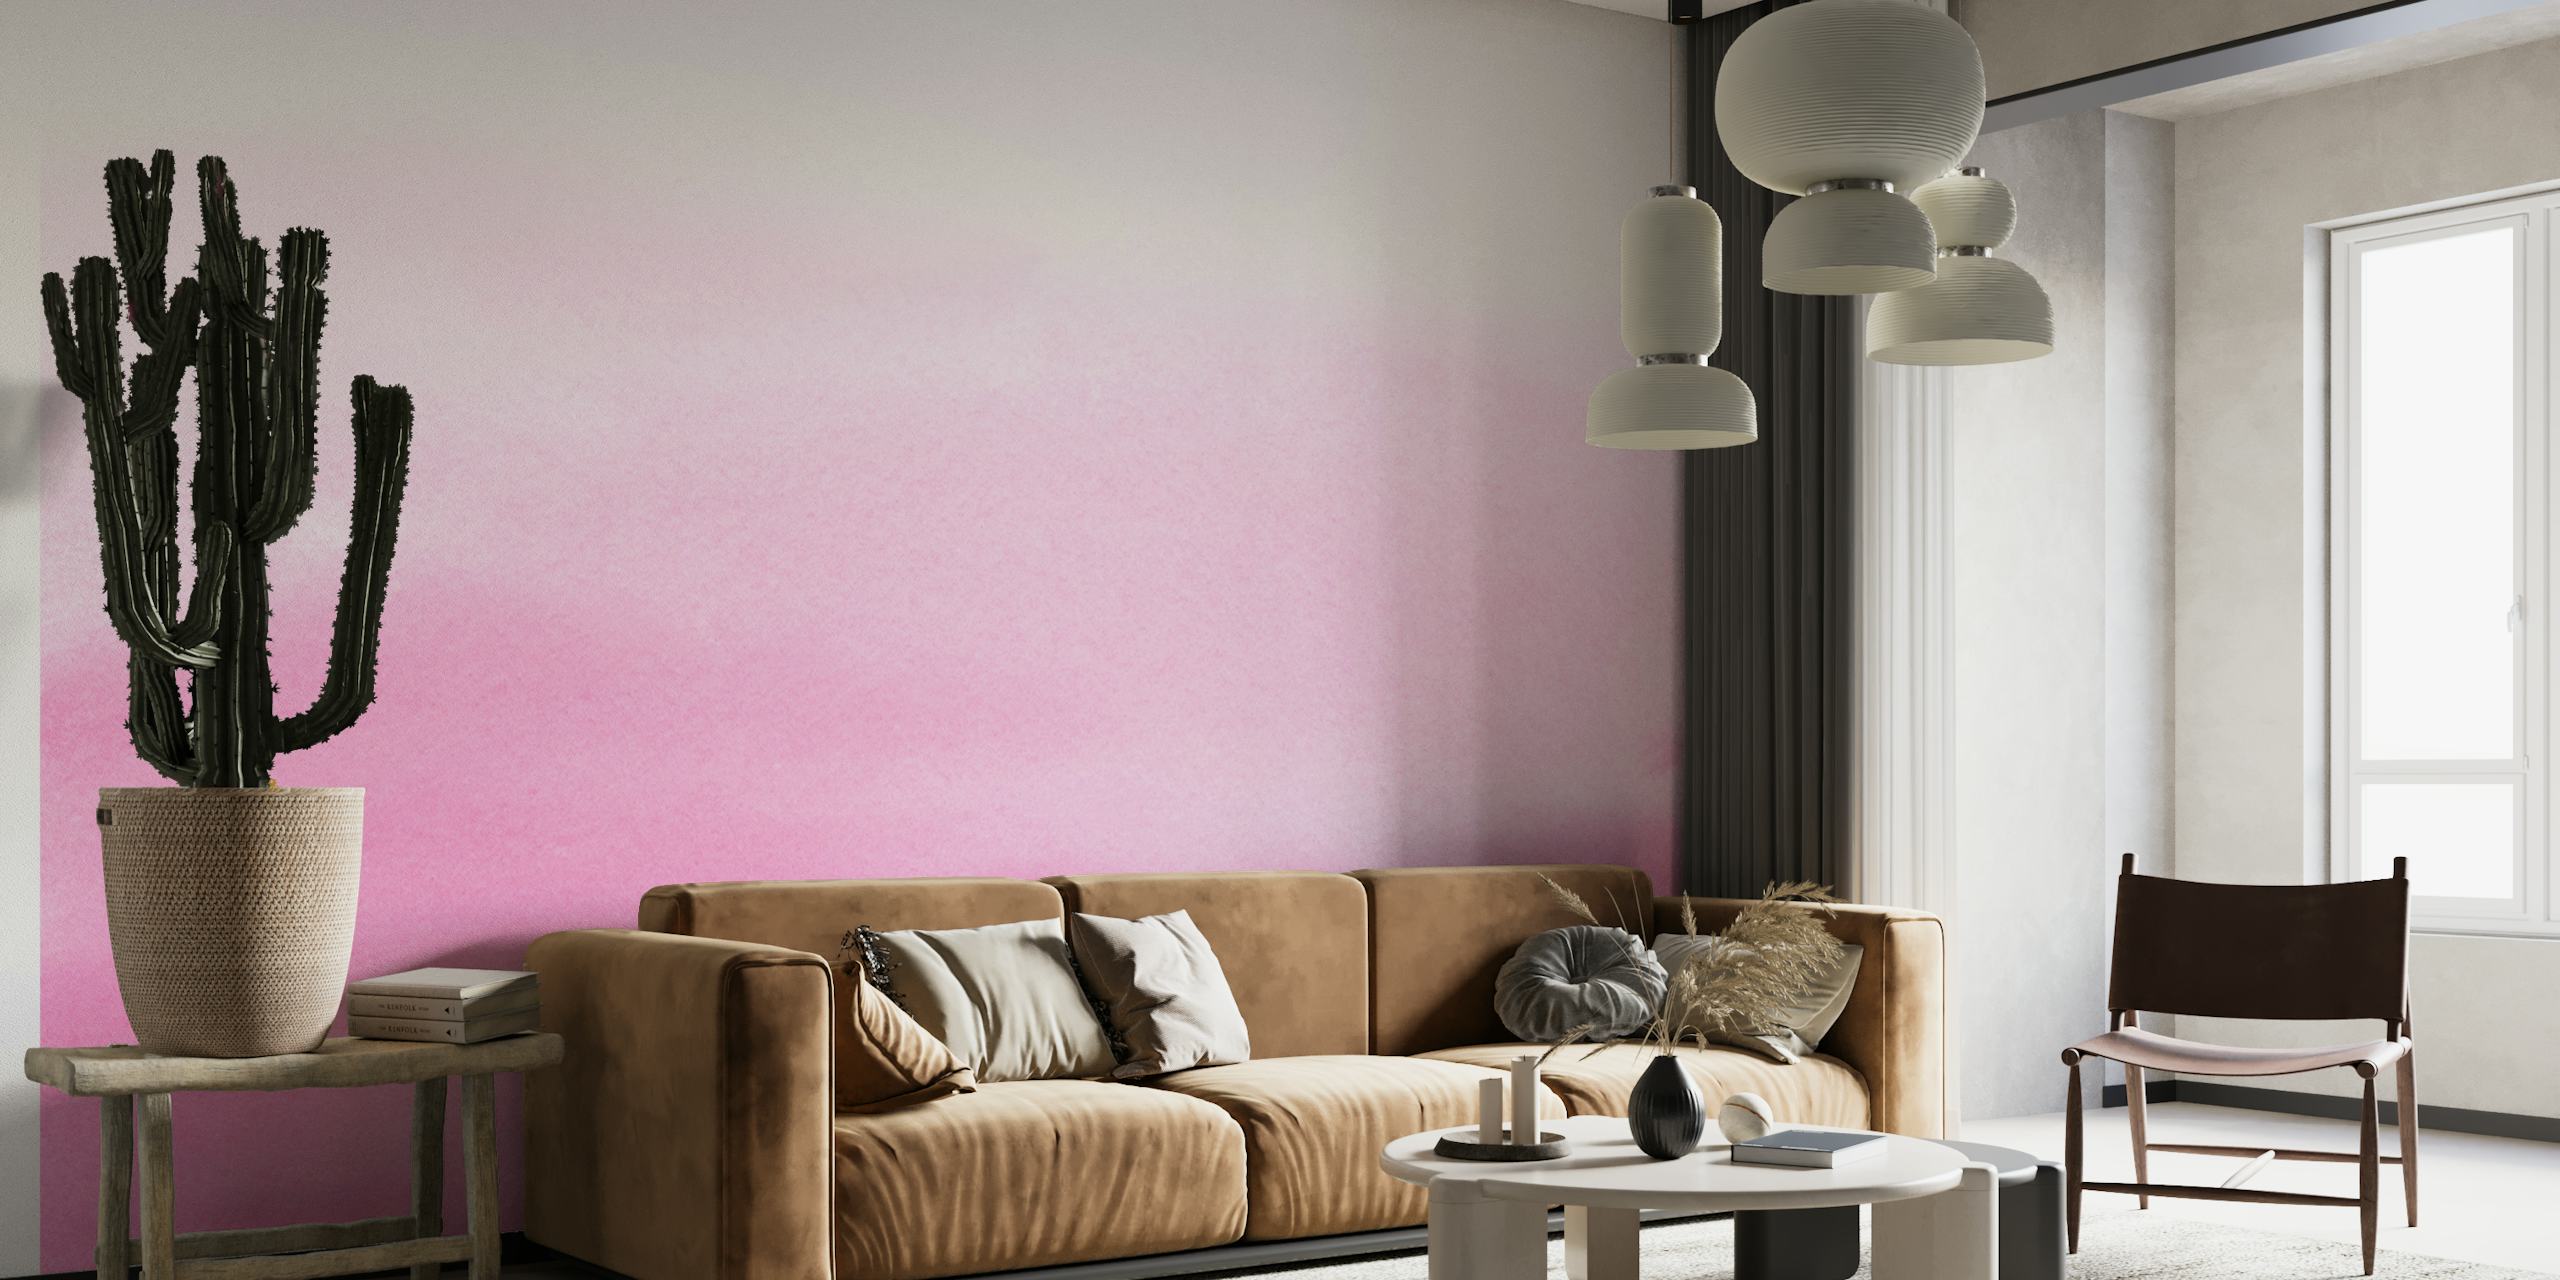 Taffy pink ombre wallpaper